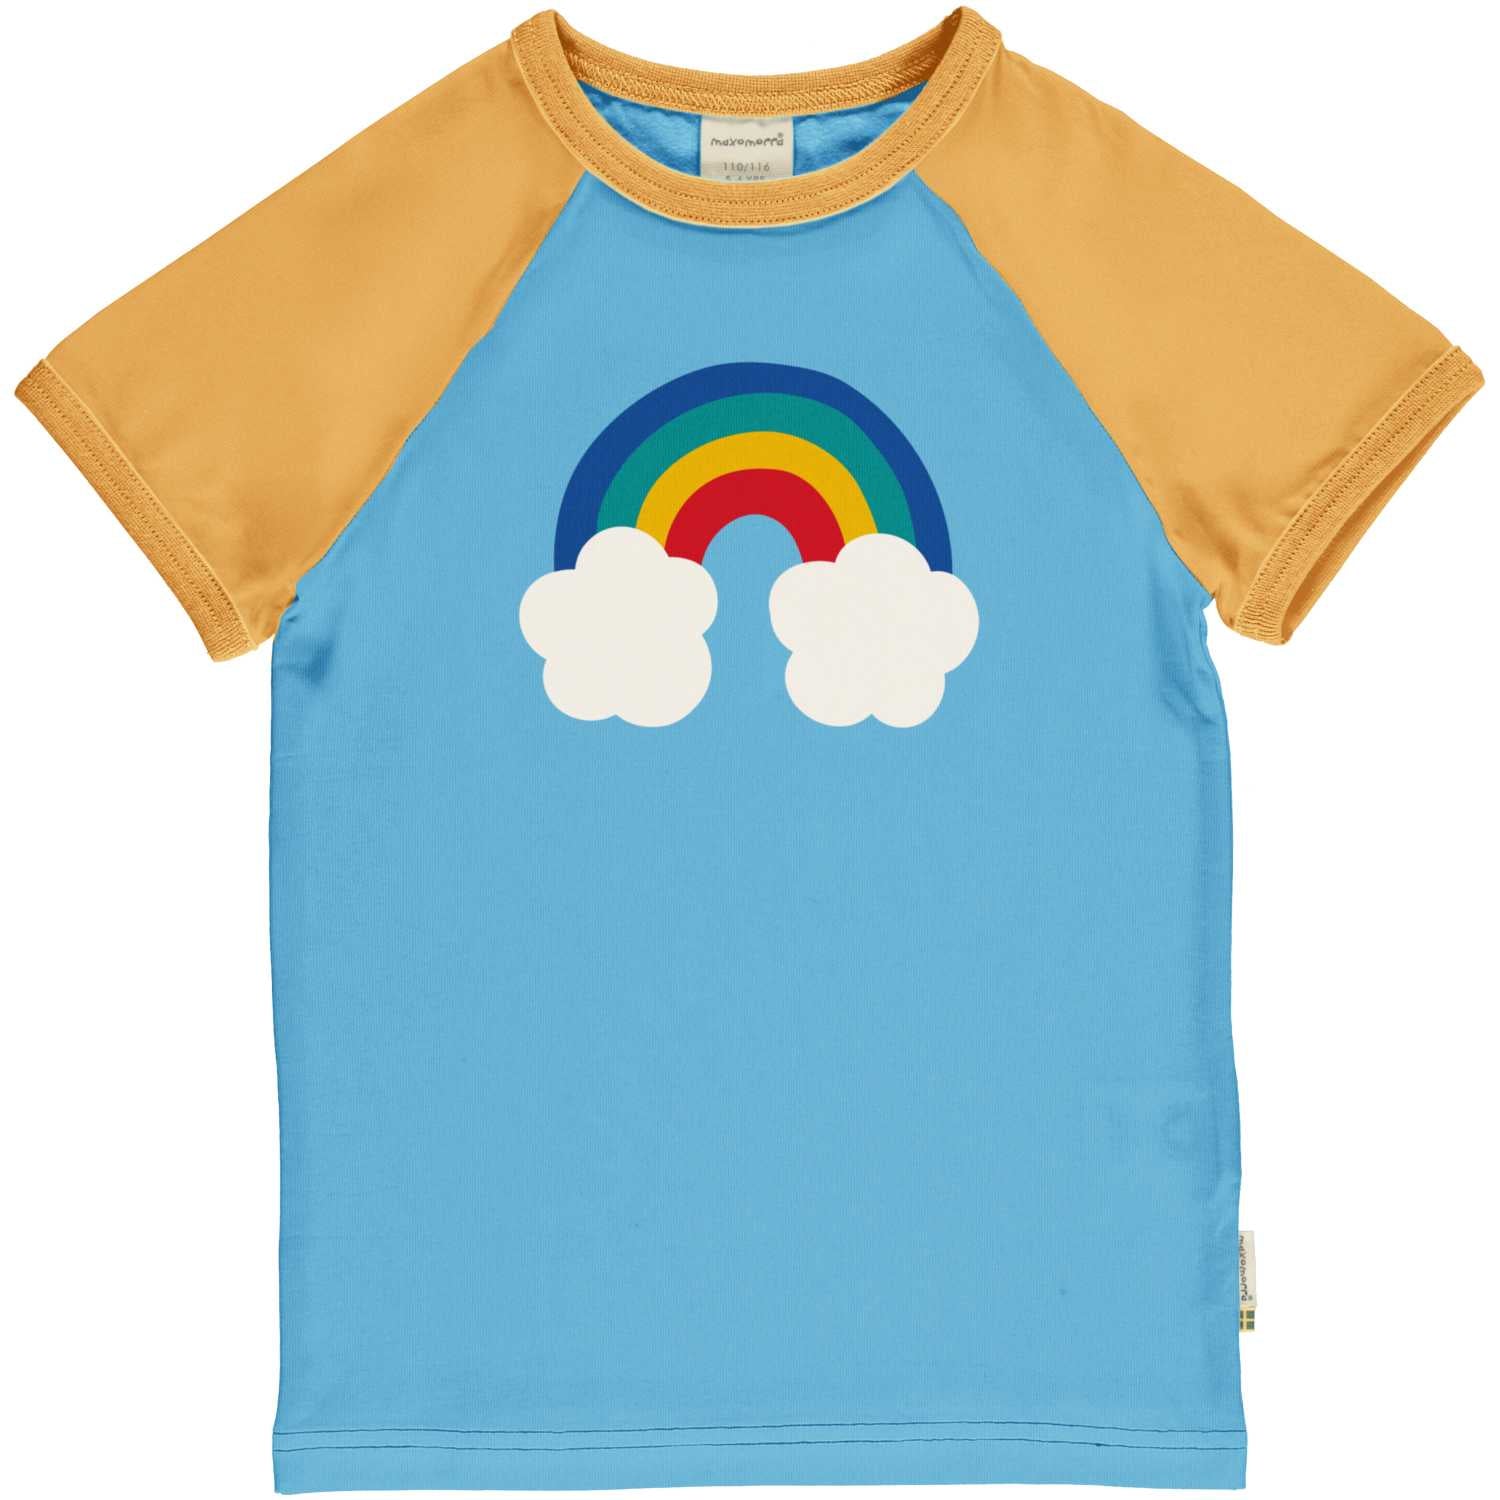 Maxomorra Rainbow Raglan T-Shirt Ss24 Clothing 3-4YRS / Blue,5-6YRS / Blue,7-8YRS / Blue